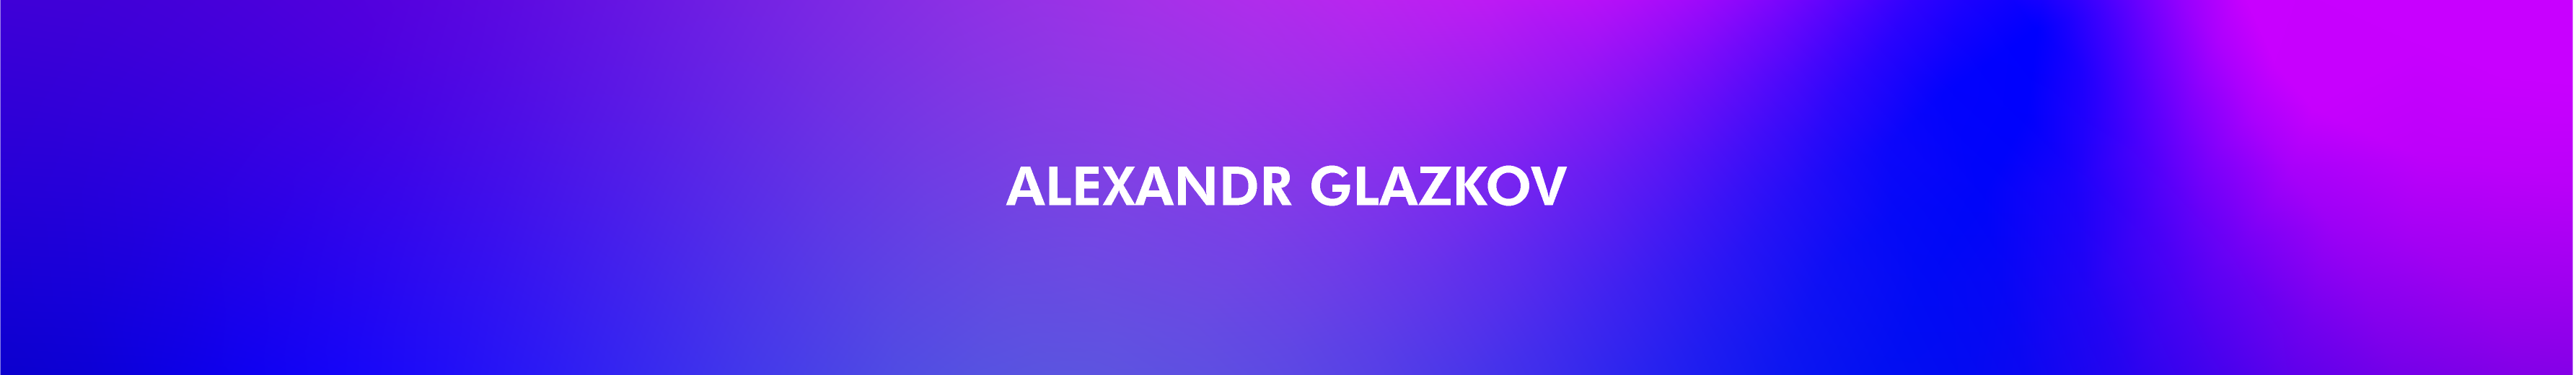 alexandr glazkov's profile banner